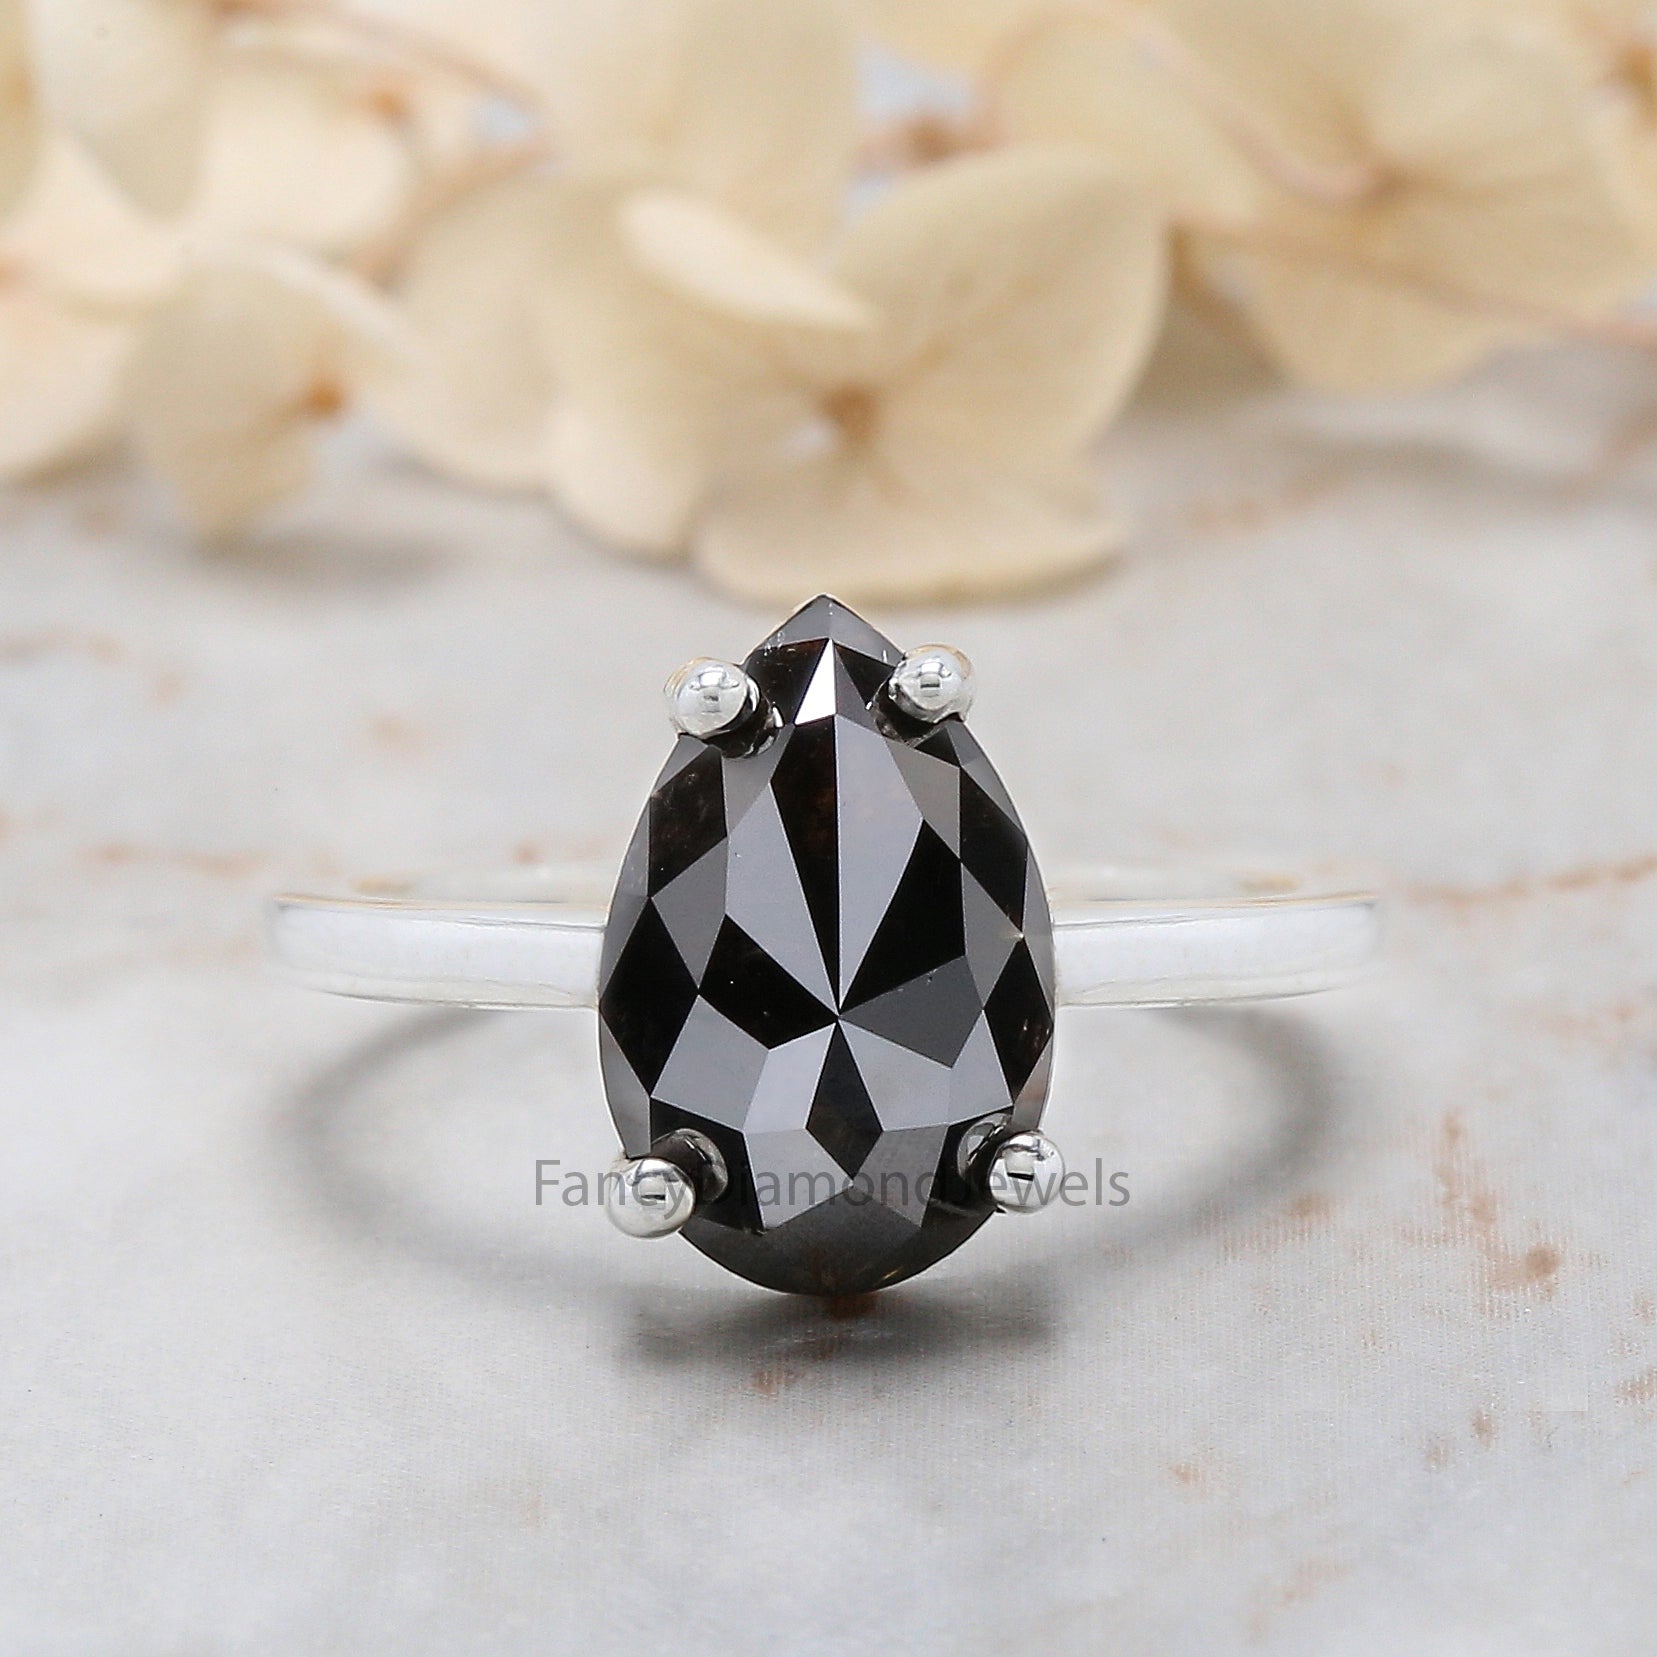 4.27 carat marquise-cut Fancy grey diamond engagement ring